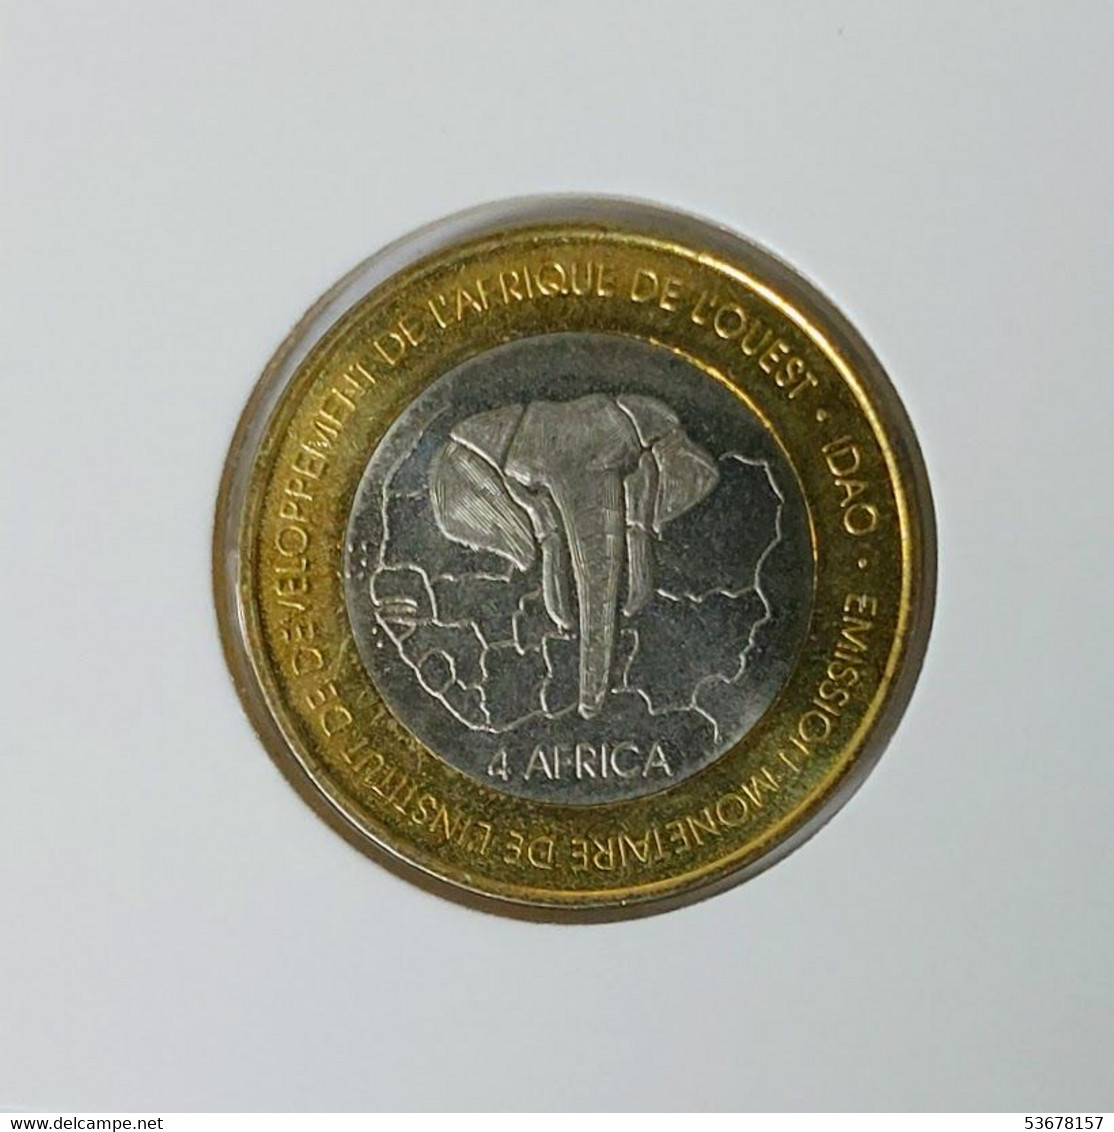 Niger - 6000 CFA Francs (2 Africa) 2005, Stop Malaria!, X# 16 (Fantasy Coin) (#1391) - Níger